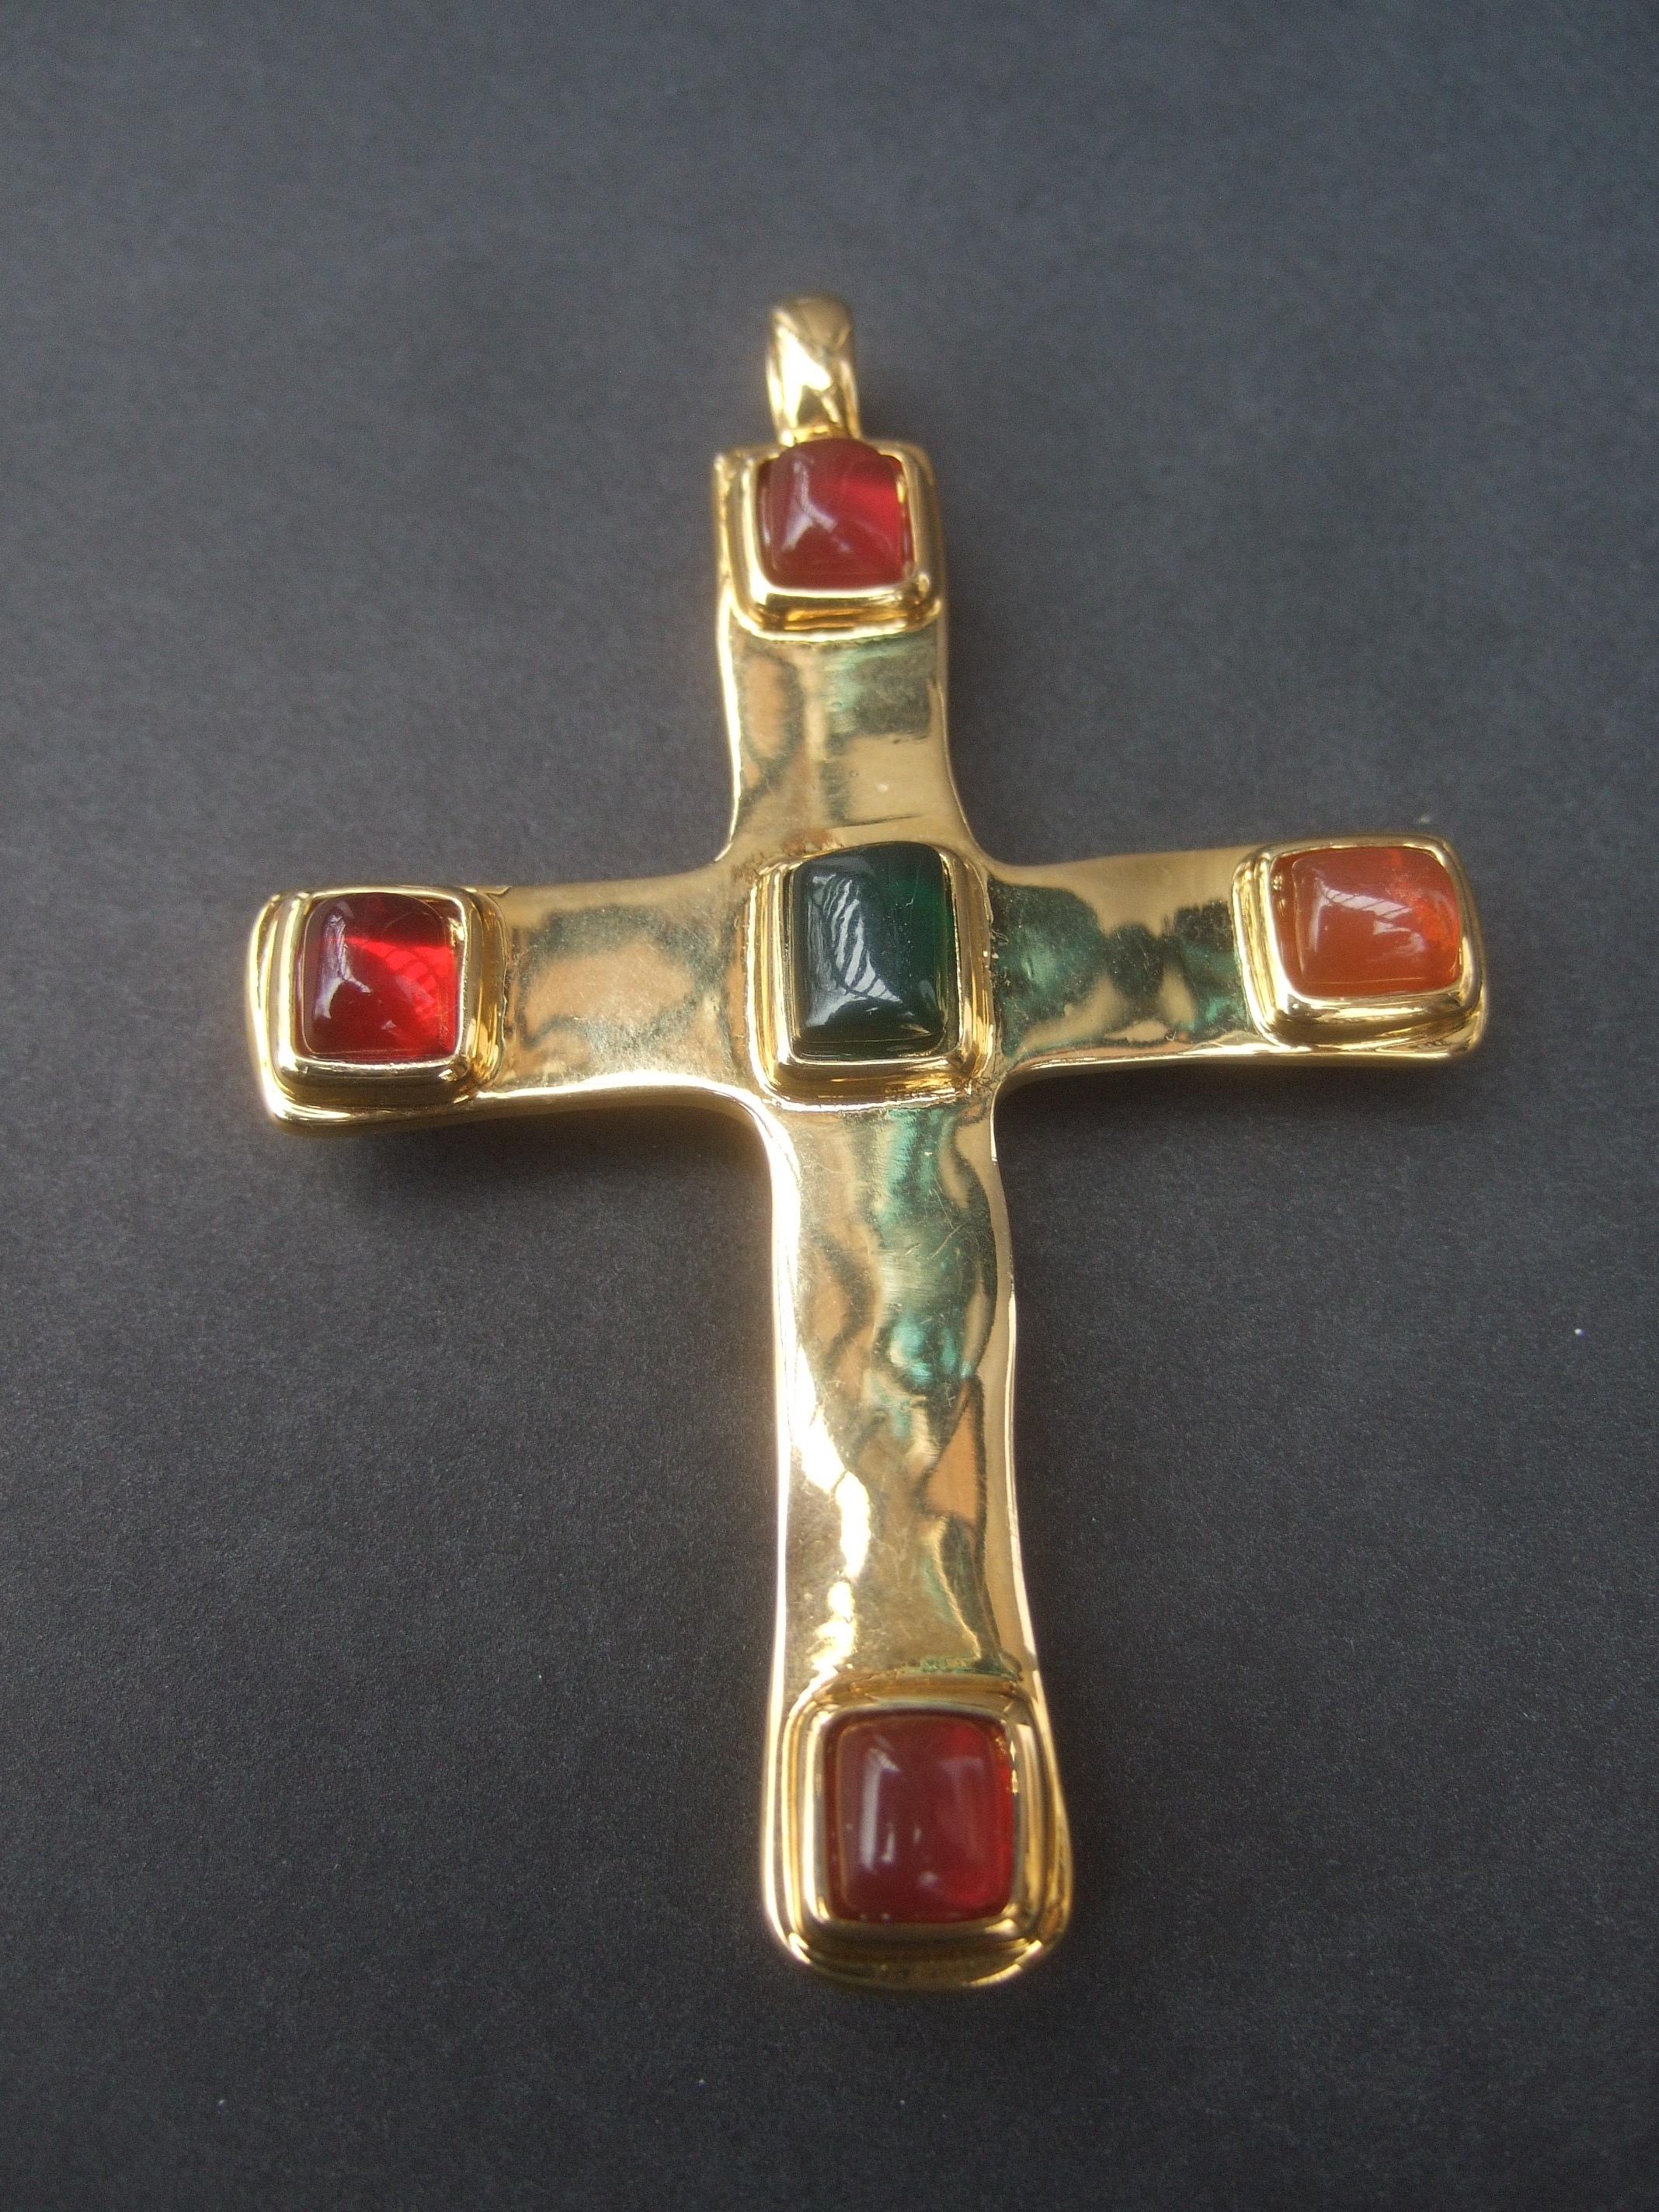 Dellio Large Gilt Metal Poured Resin Cross Pendant Necklace c 1980s For Sale 11